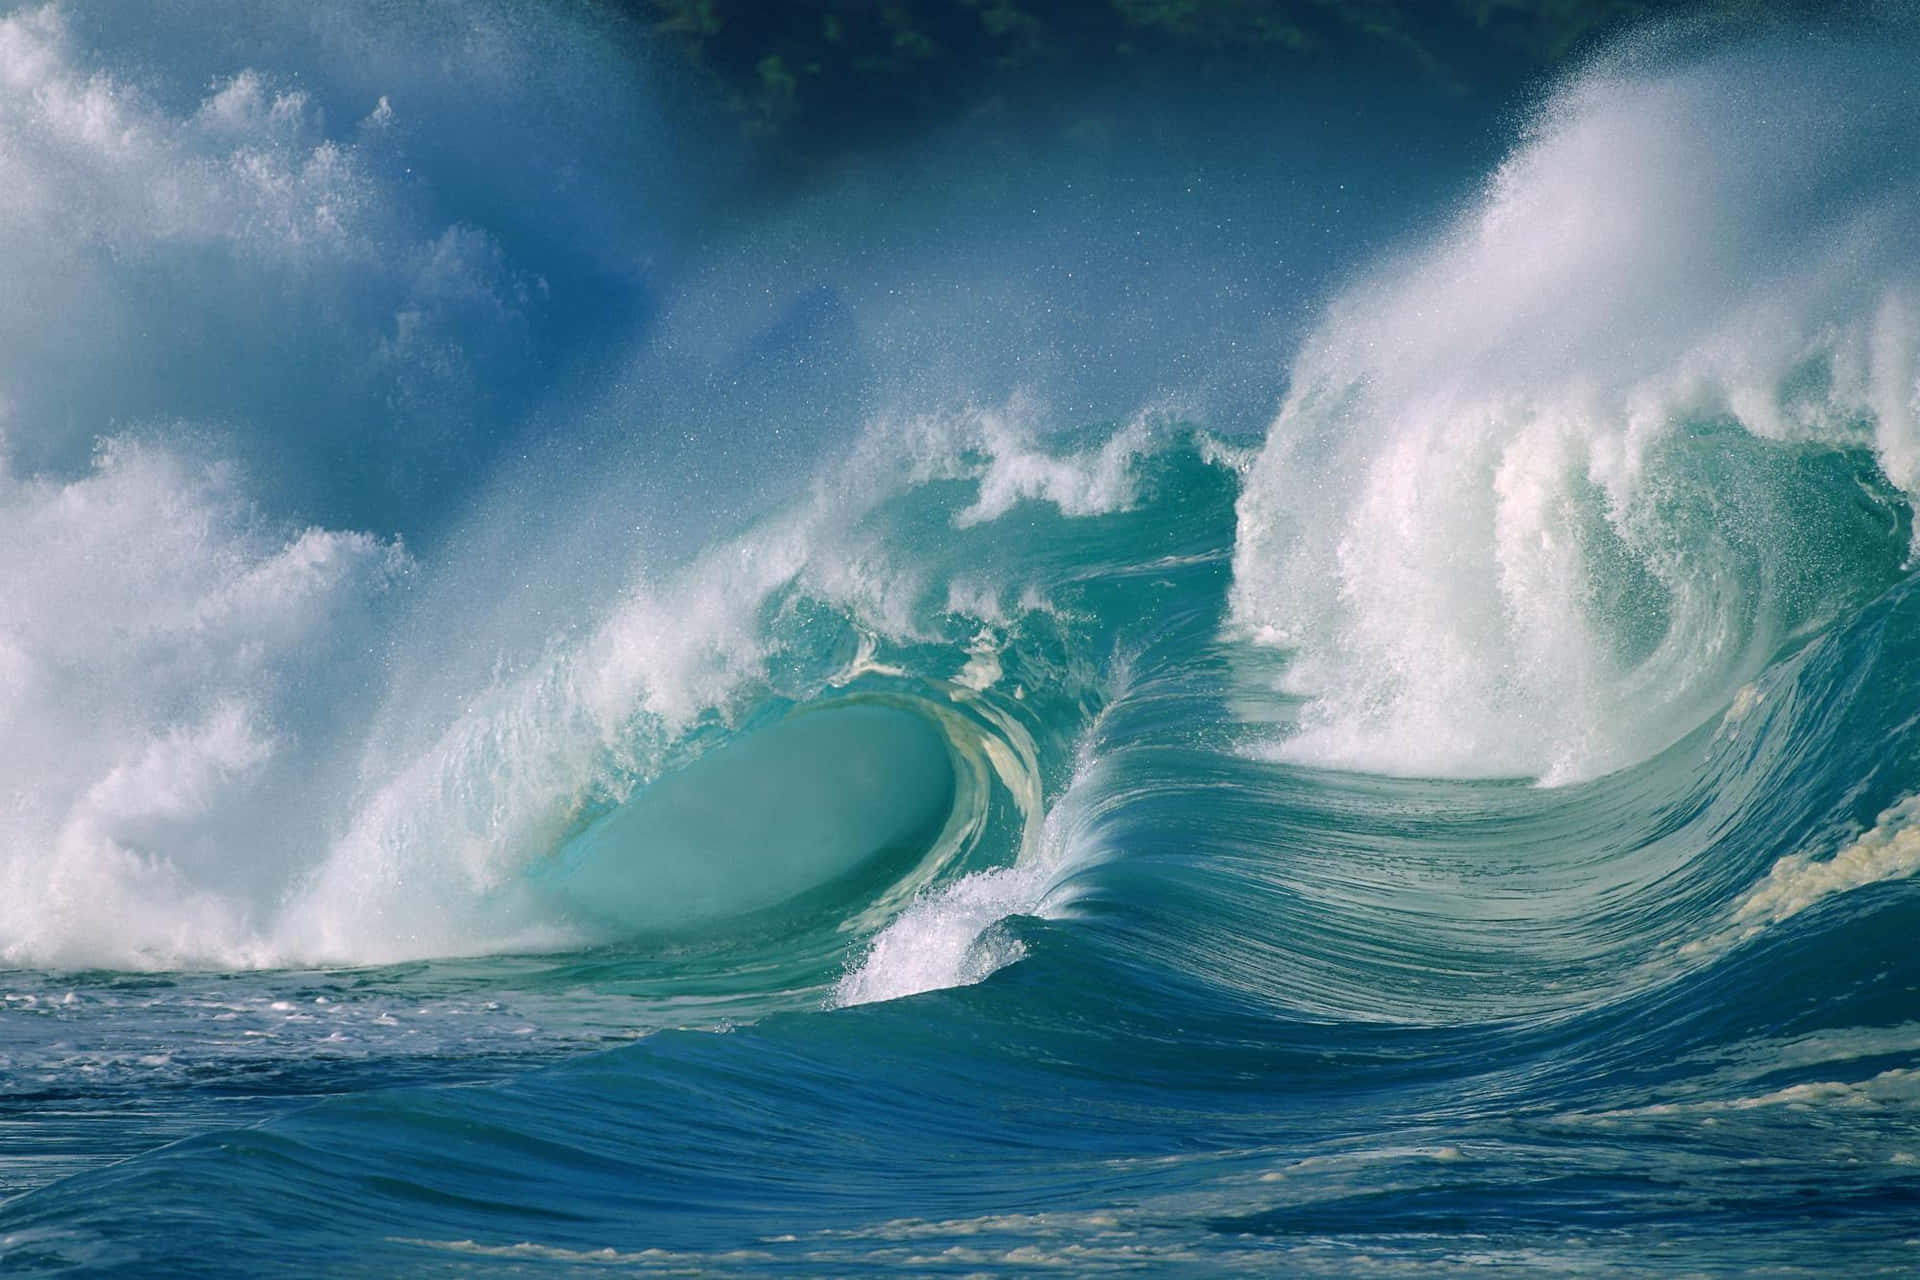 Majestic Ocean Waves Crashing on the Shore